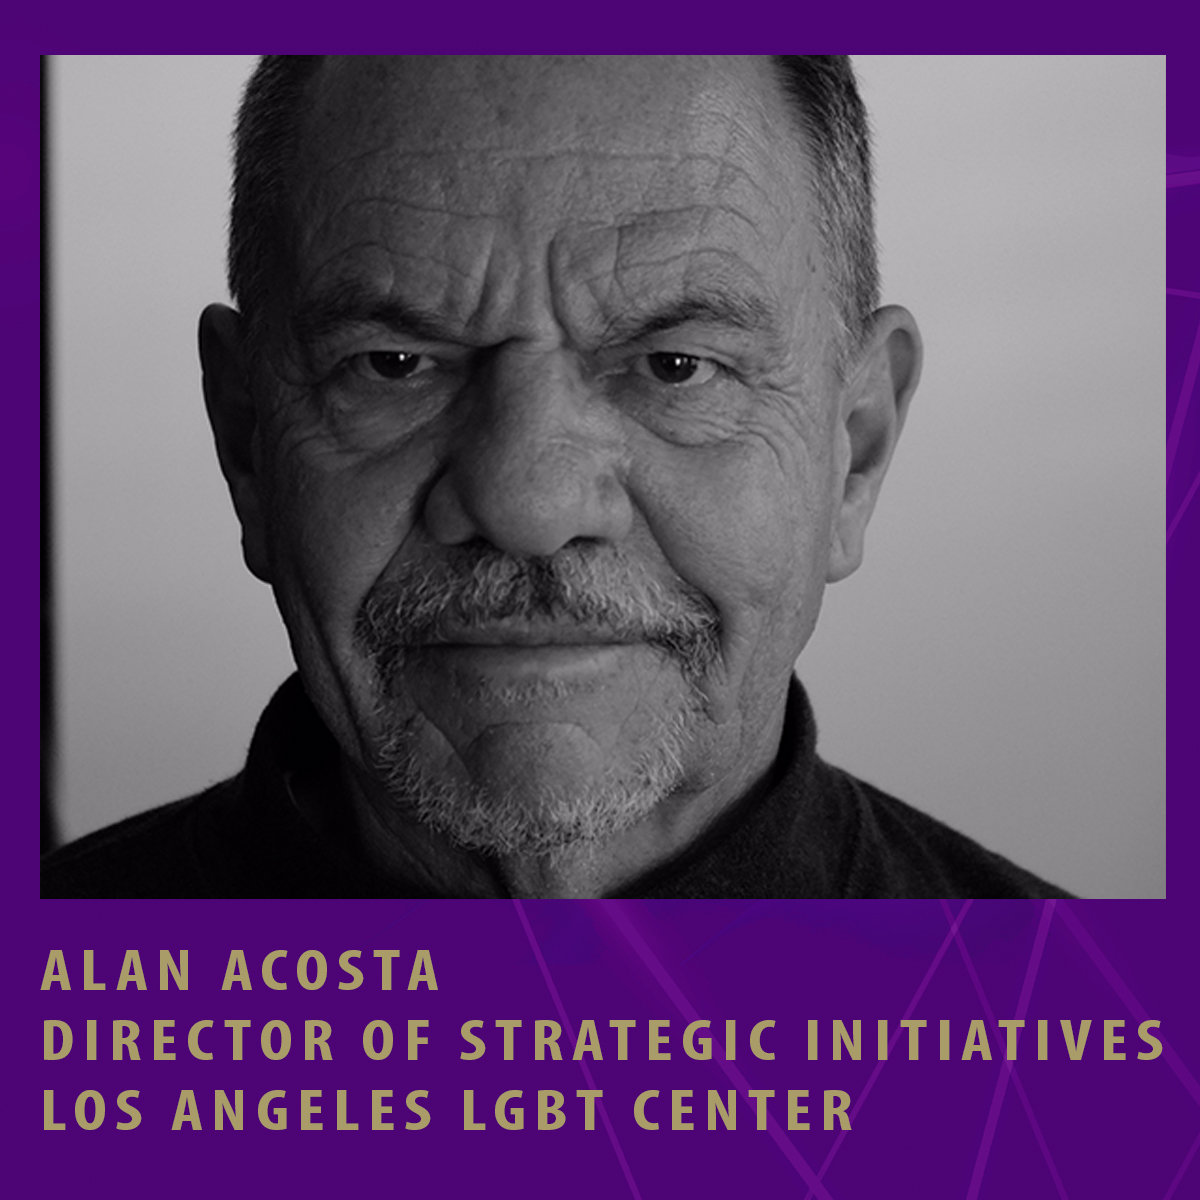 Alan Acosta